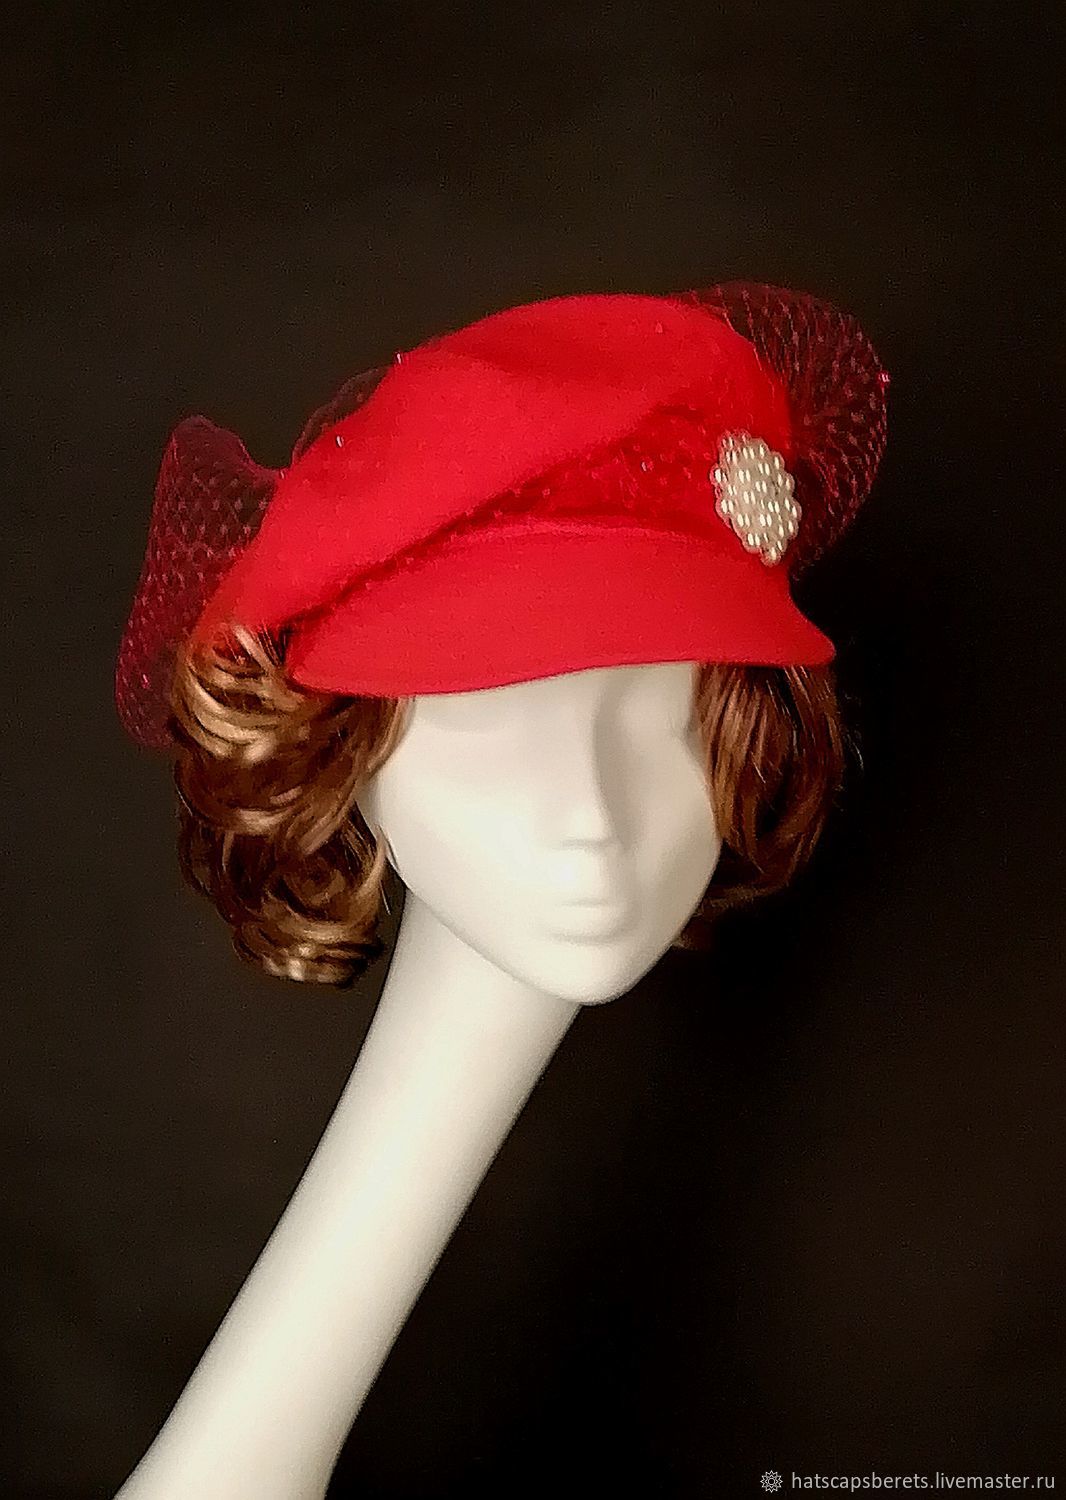 Unique red cap with veil handmade by designer Ushakova, Caps1, Moscow,  Фото №1